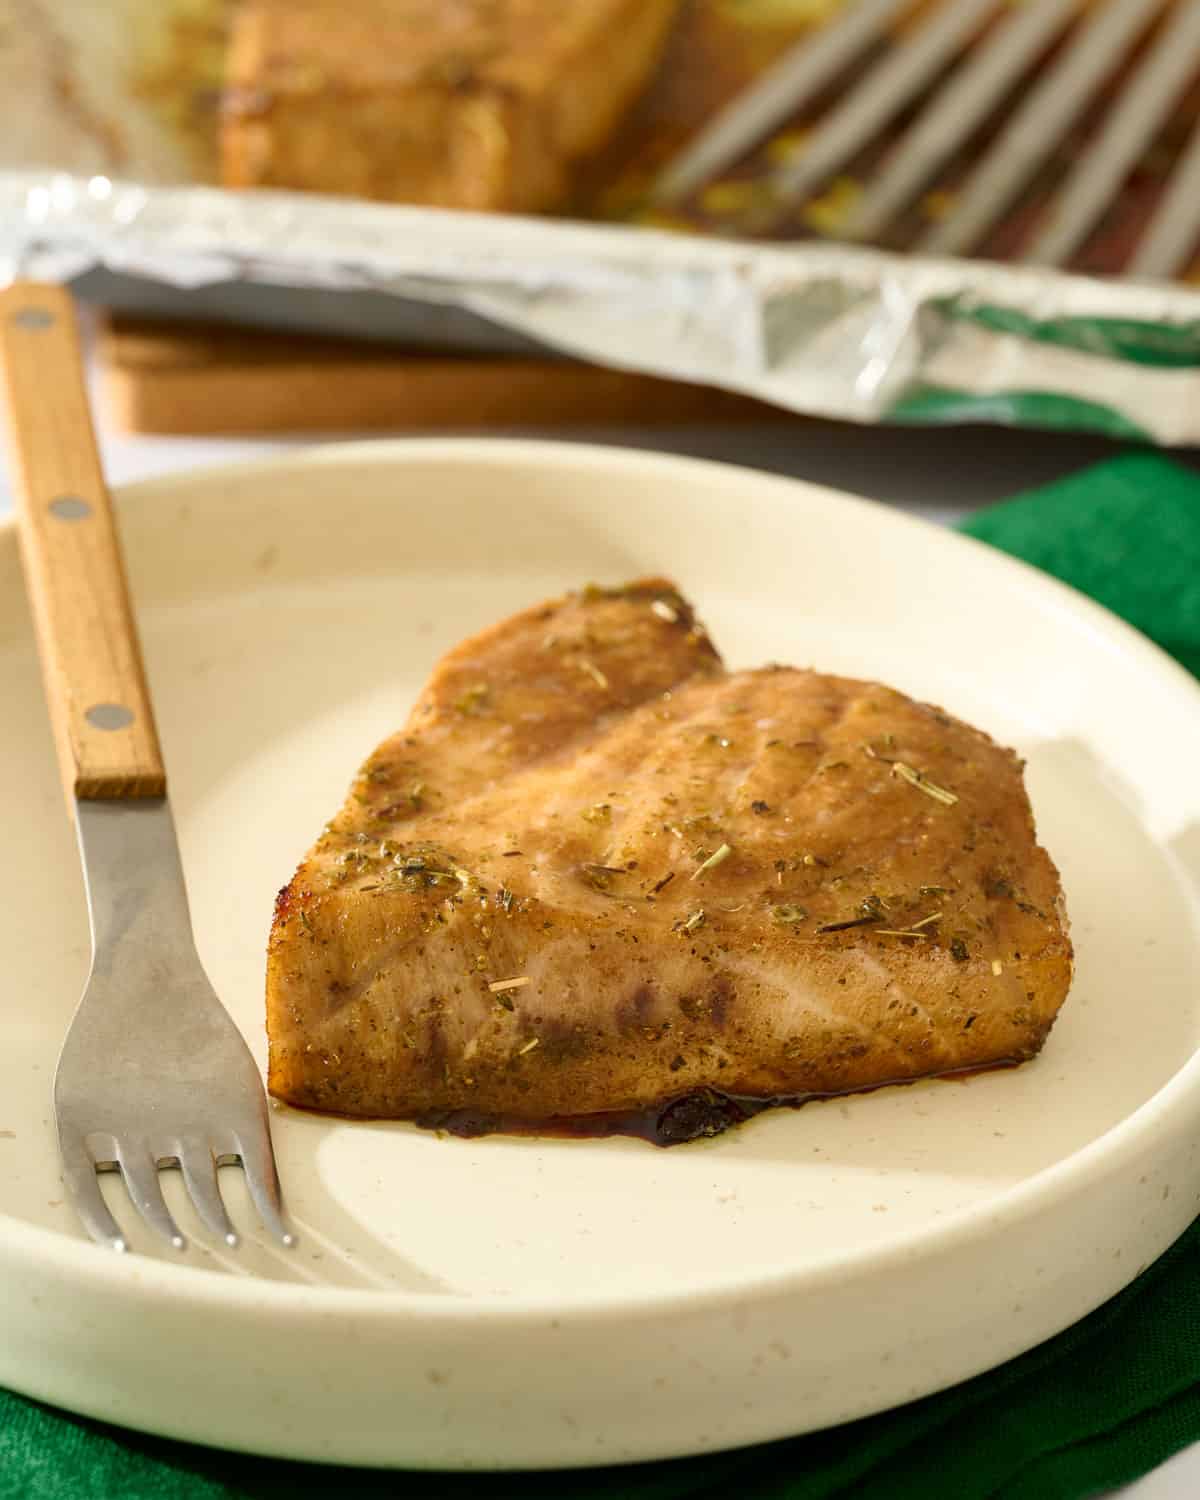 Baked balsamic swordfish with Italian seasoning on a plate.